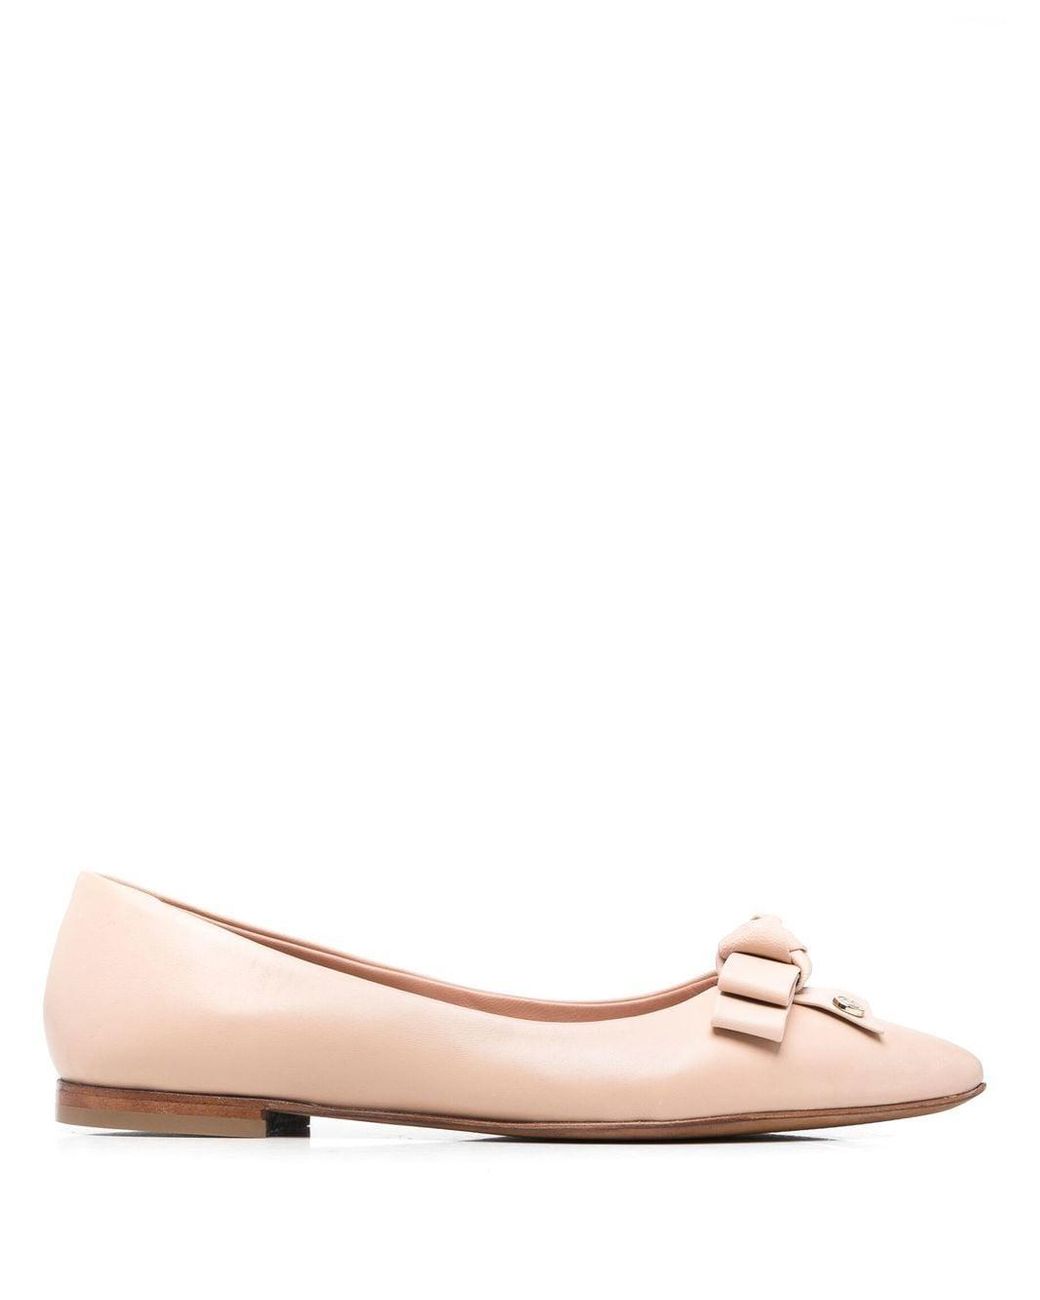 Baldinini Leather Bow-embellished Ballerina Shoes in Pink | Lyst Australia